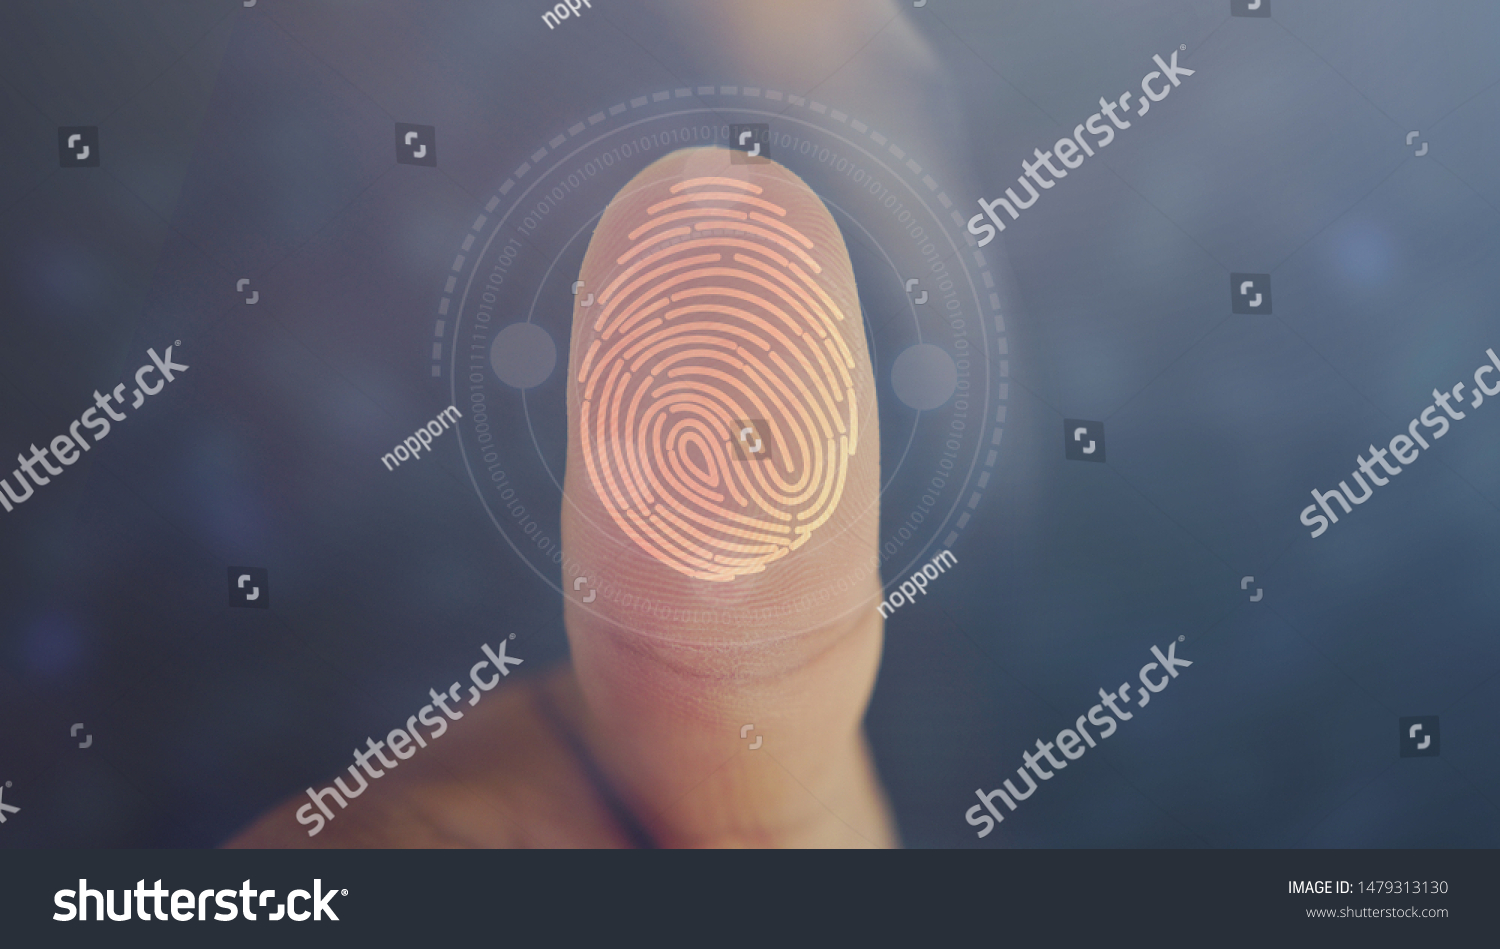 Businessman login with fingerprint scanning technology. fingerprint to identify personal, security system concept                                     #1479313130